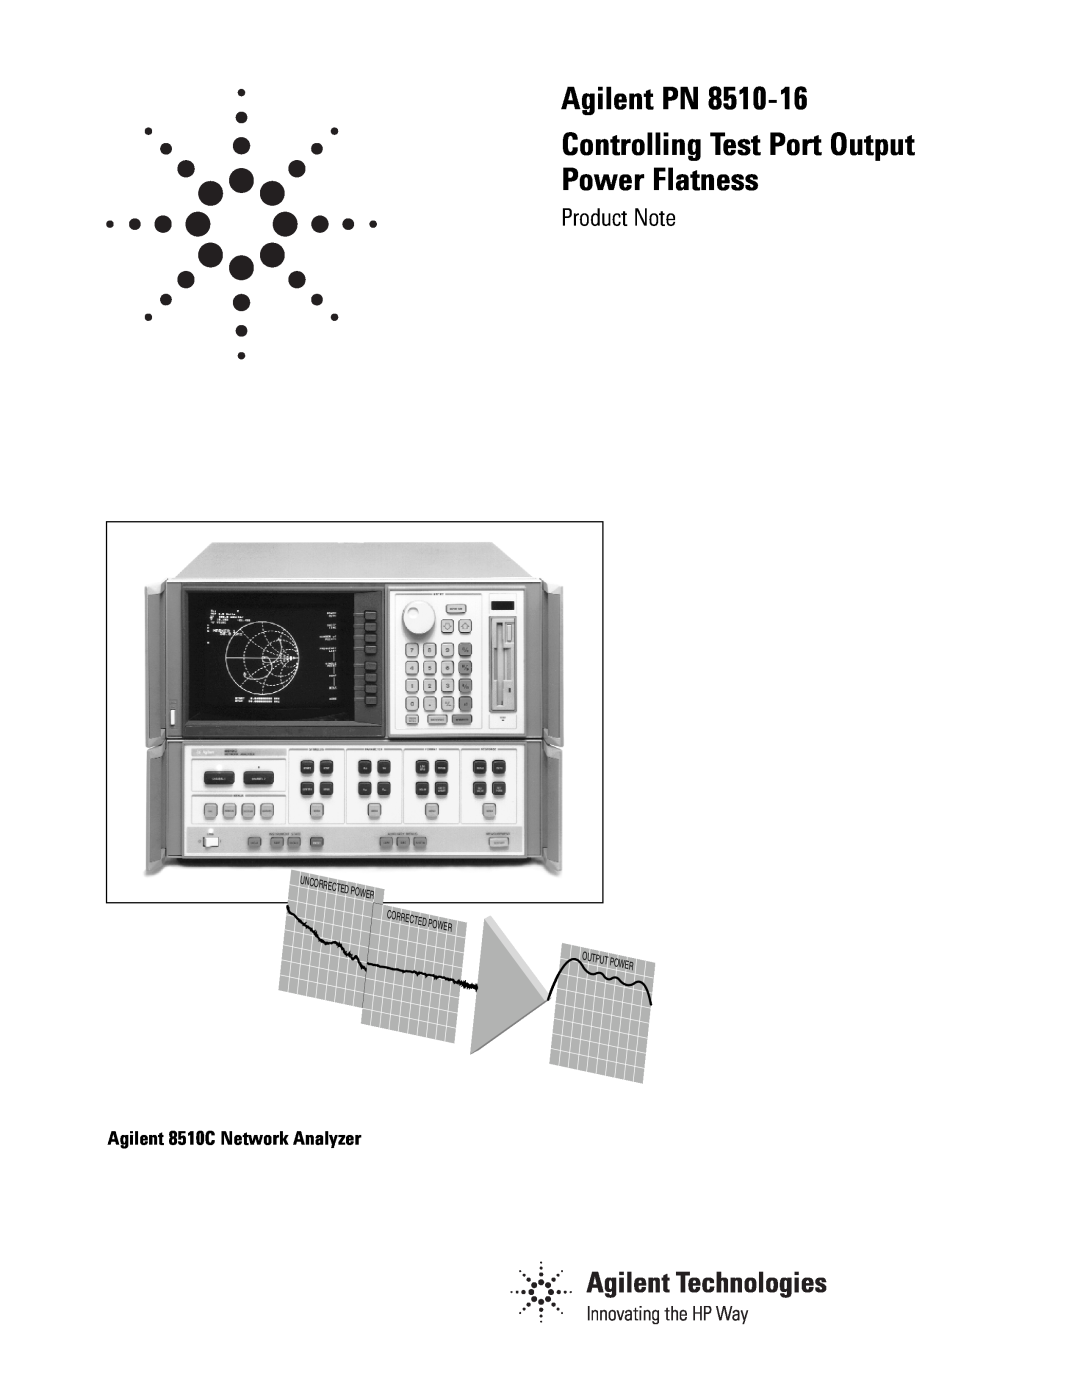 Agilent Technologies PN 8510-16 manual Agilent PN Controlling Test Port Output Power Flatness, Product Note 